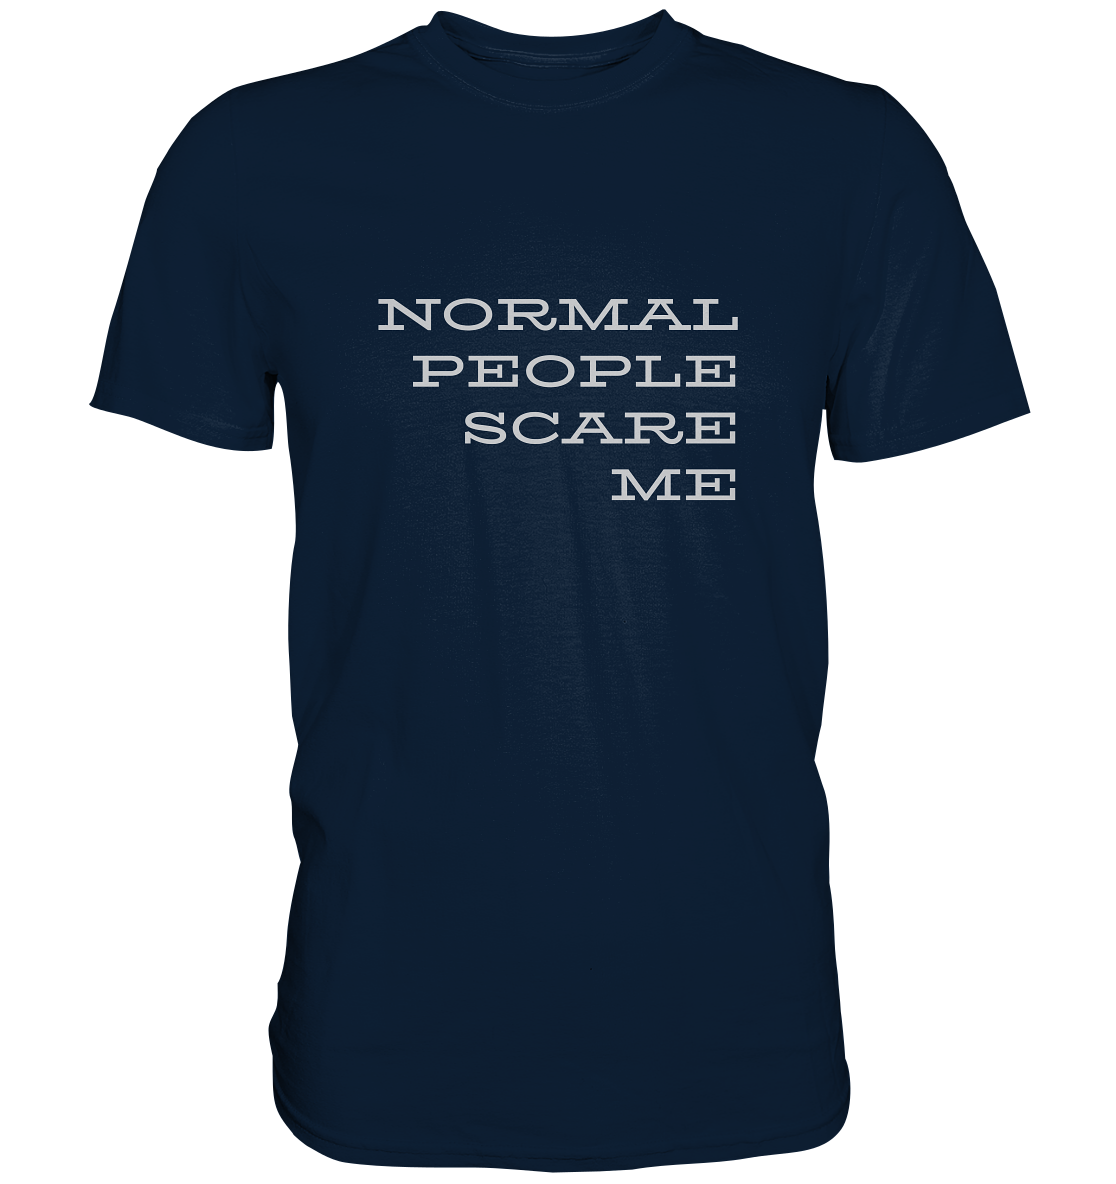 Herren-T-Shirt mit Aufdruck "Normal people scare me", dunkel blau